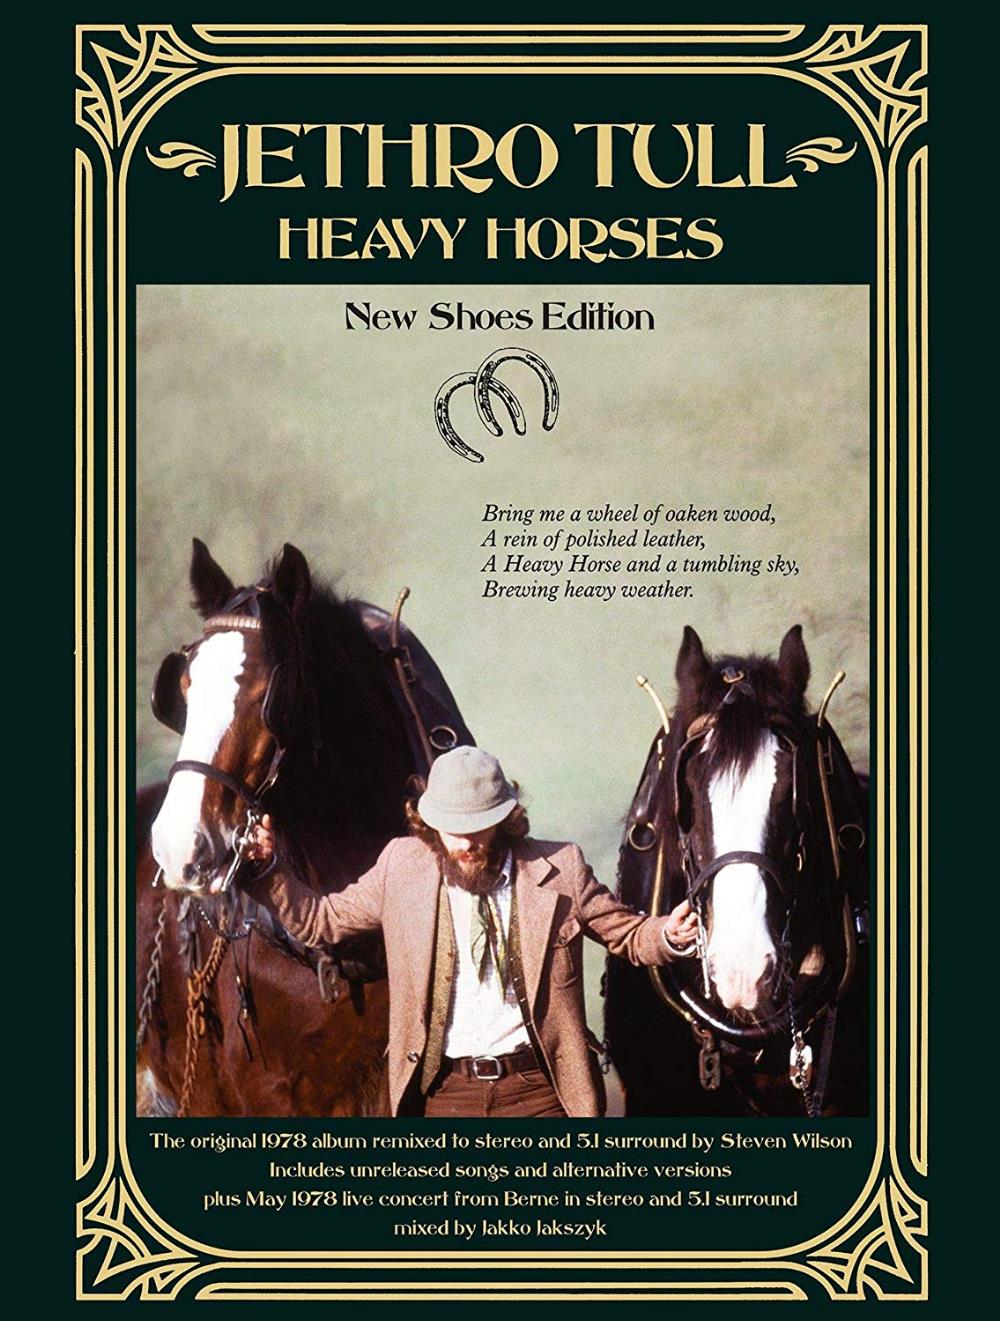 Jethro Tull Heavy Horses (New Shoes Edition) album cover